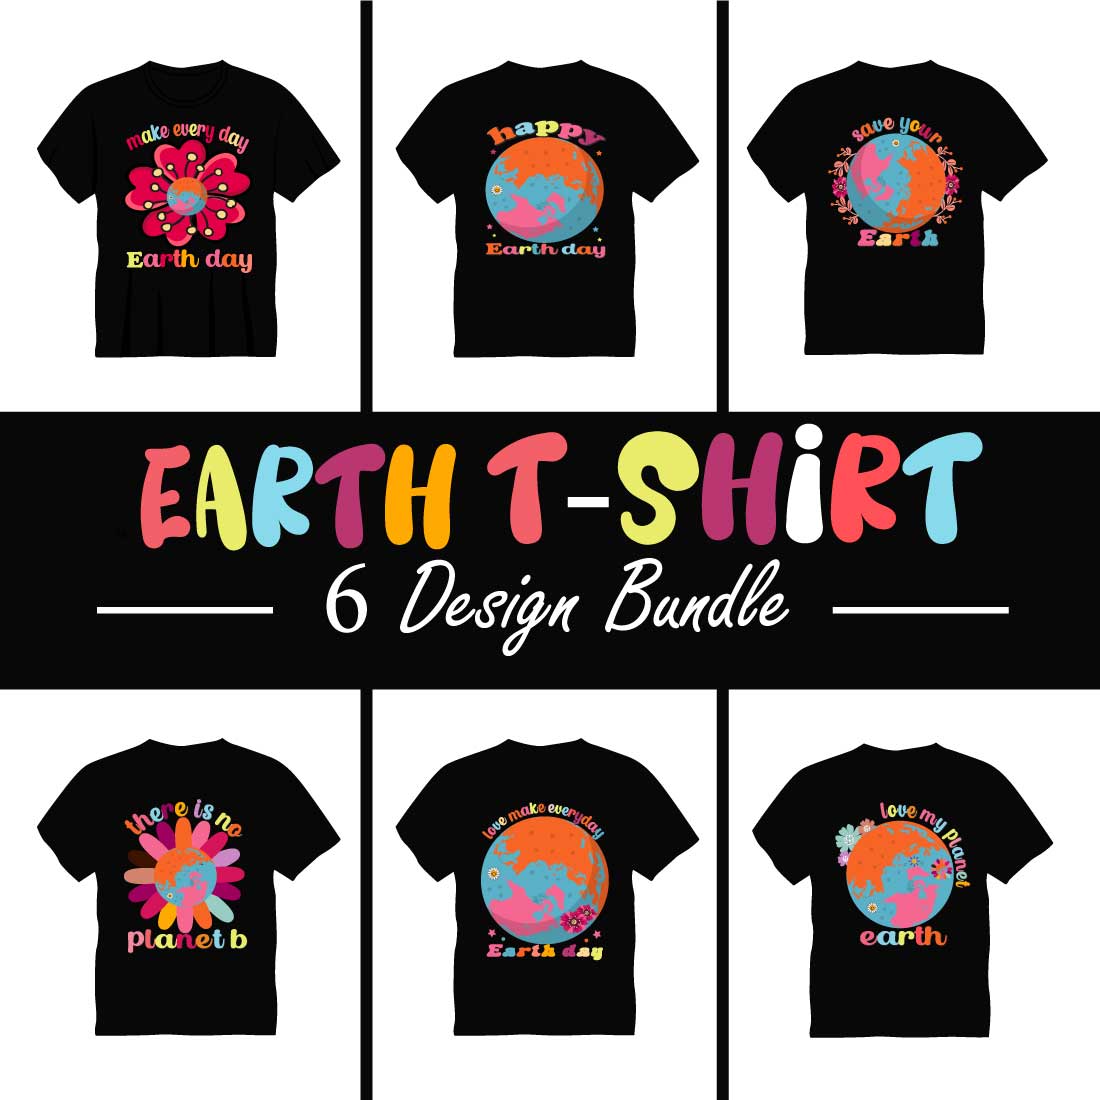 EARTH T-Shirt Design Bundles cover image.